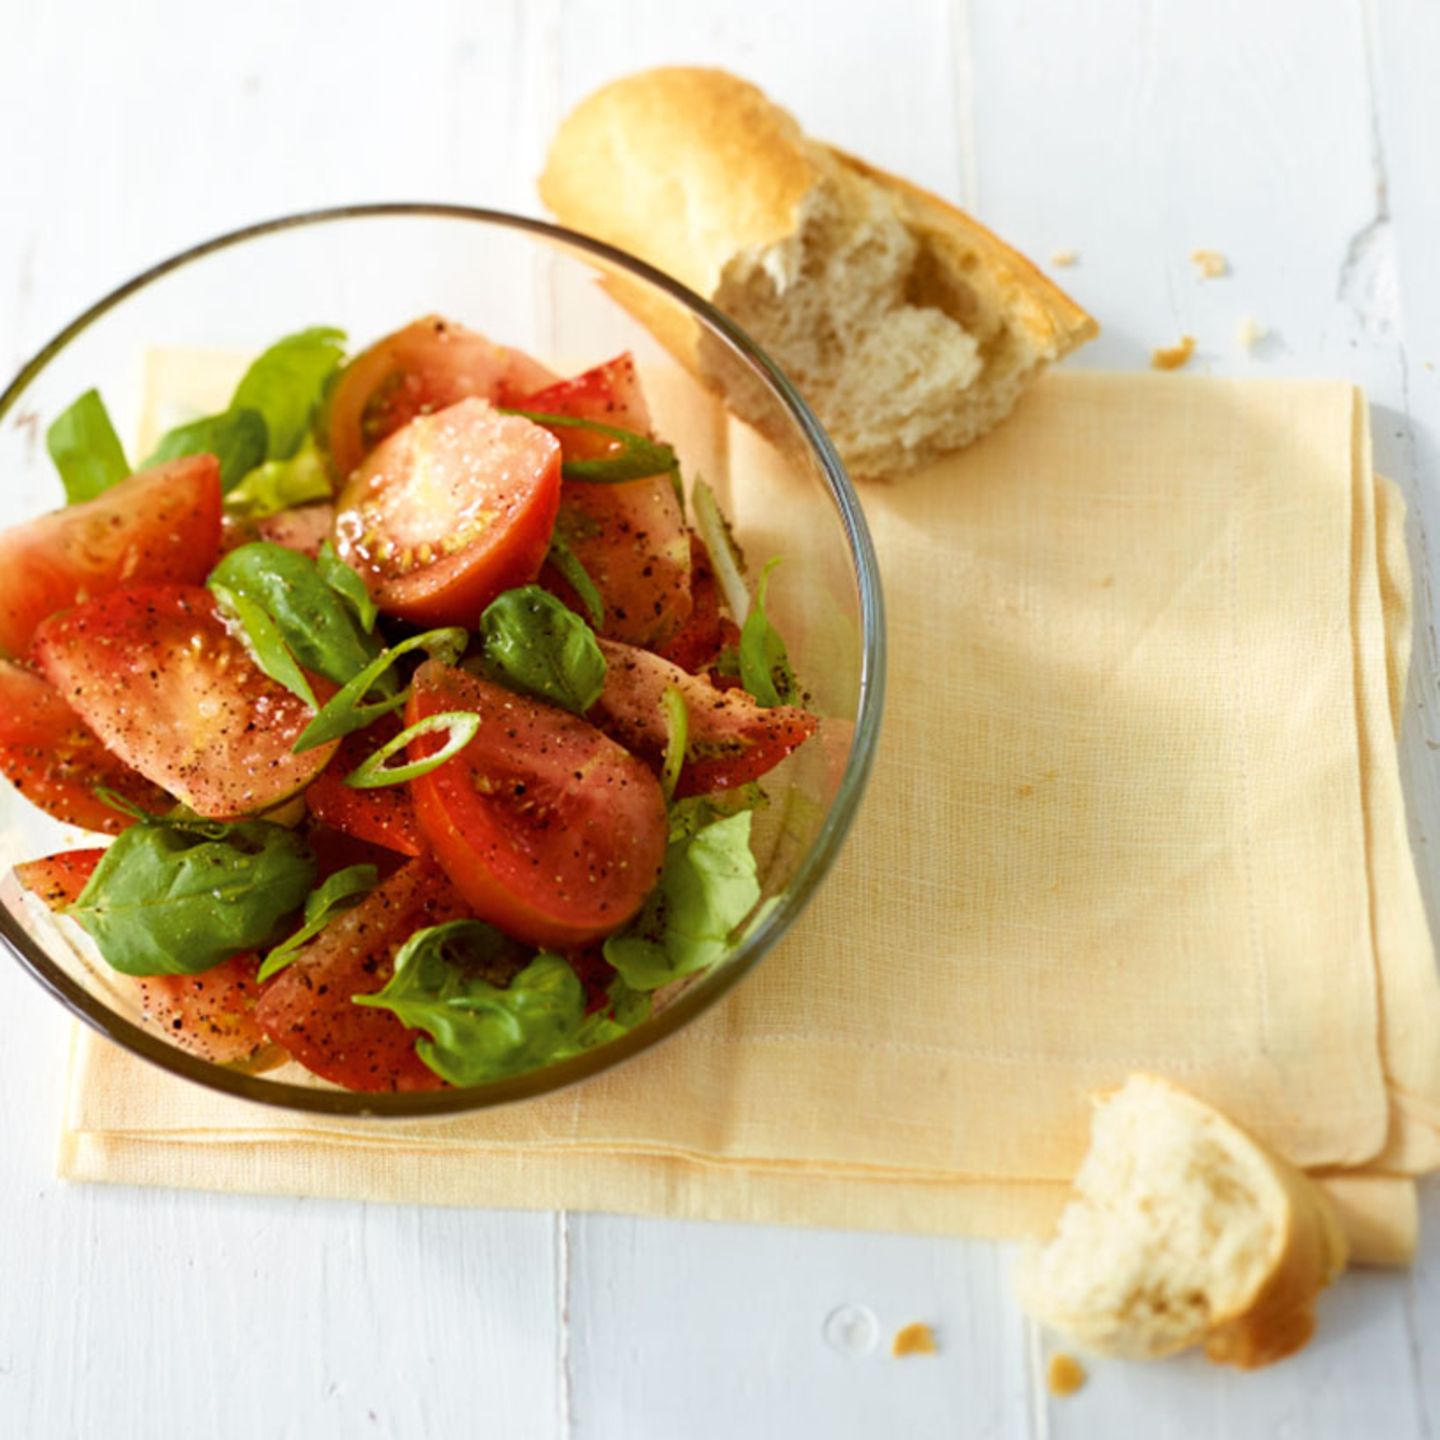 Tomaten-Basilikum-Salat